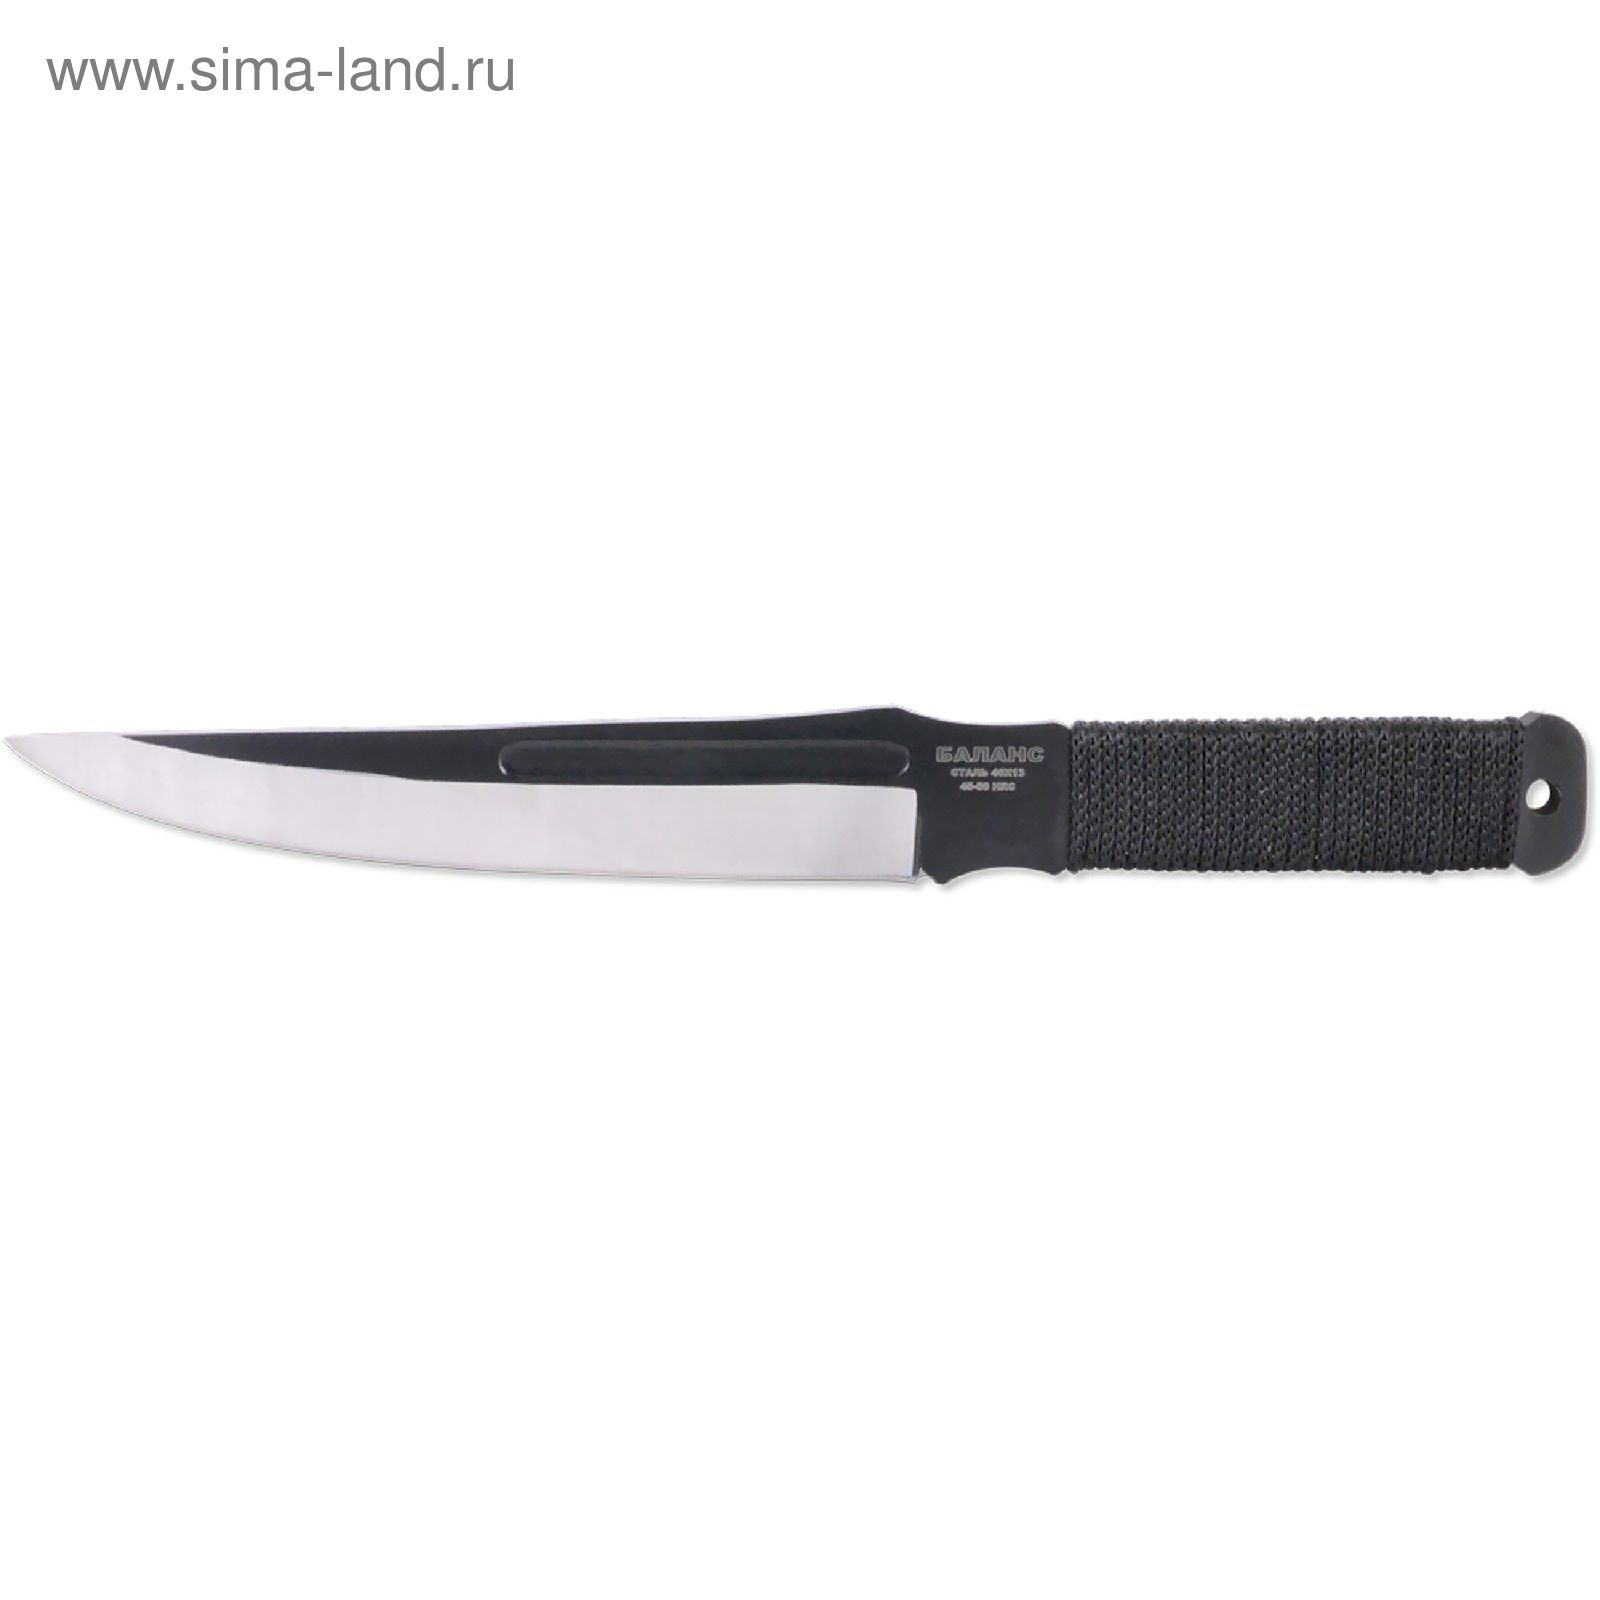 Нож метательный "Баланс" М-115-2, рукоять-металл/капрон, сталь 40х13